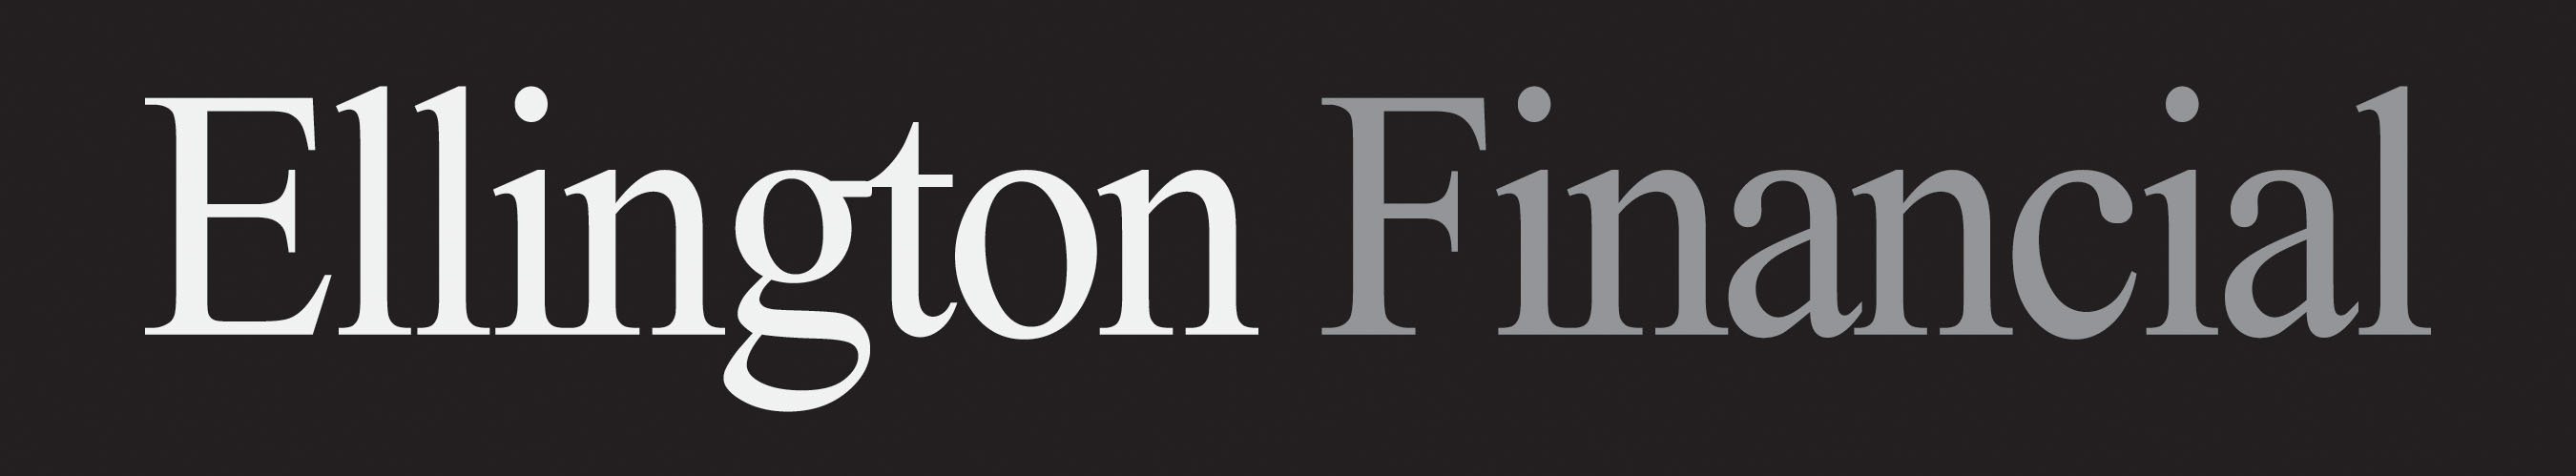 Ellington Financial LLC. (PRNewsFoto/Ellington Financial LLC) (PRNewsFoto/ELLINGTON FINANCIAL LLC) (PRNewsFoto/ELLINGTON FINANCIAL LLC)